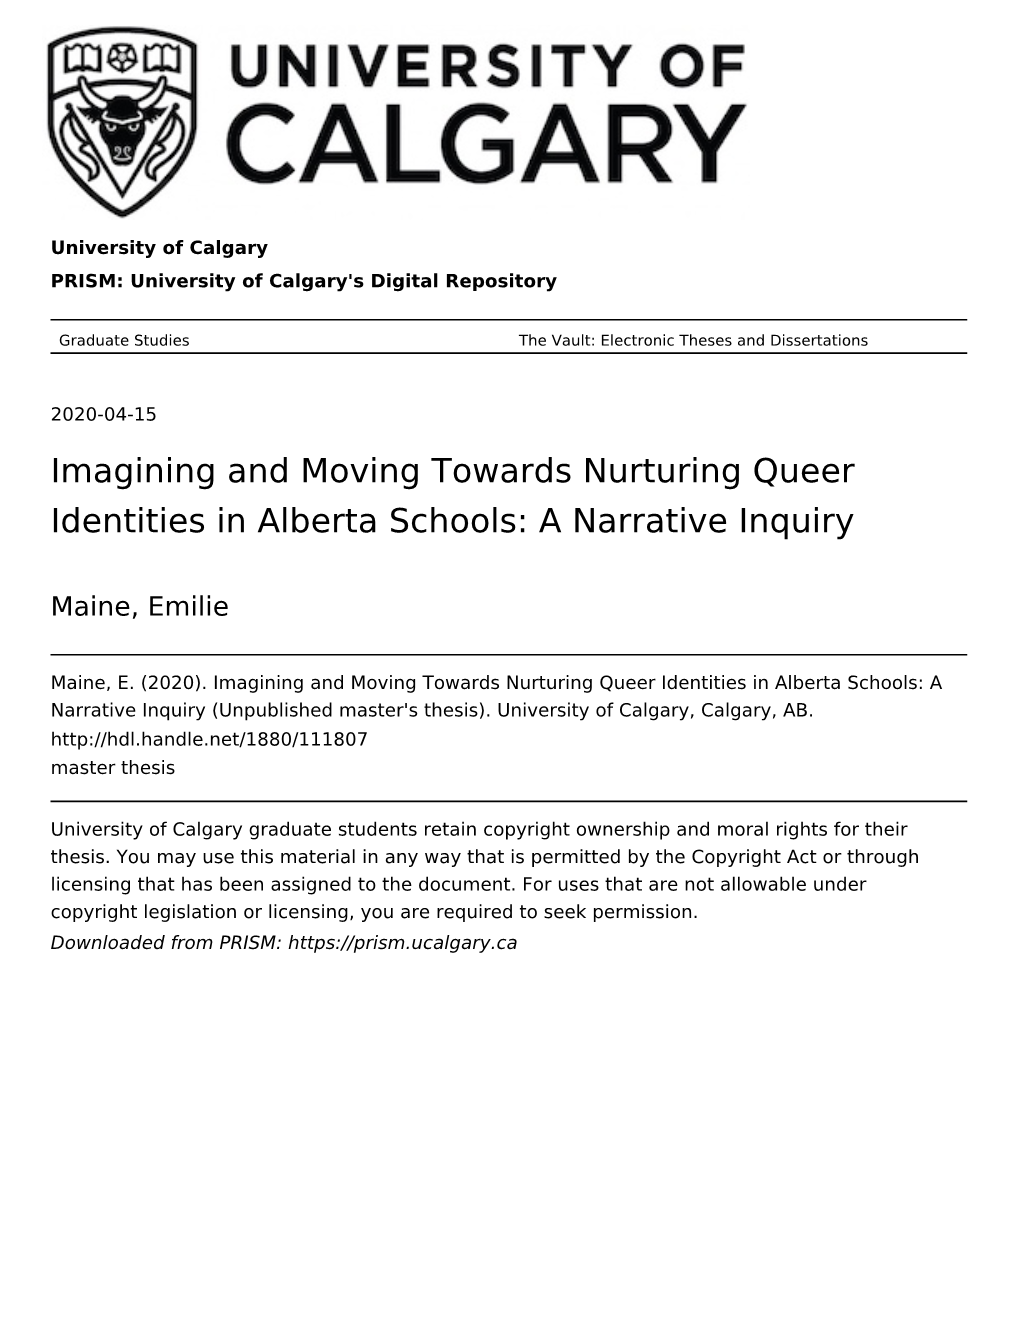 Imagining and Moving Towards Nurturing Queer Identities in Alberta Schools: a Narrative Inquiry